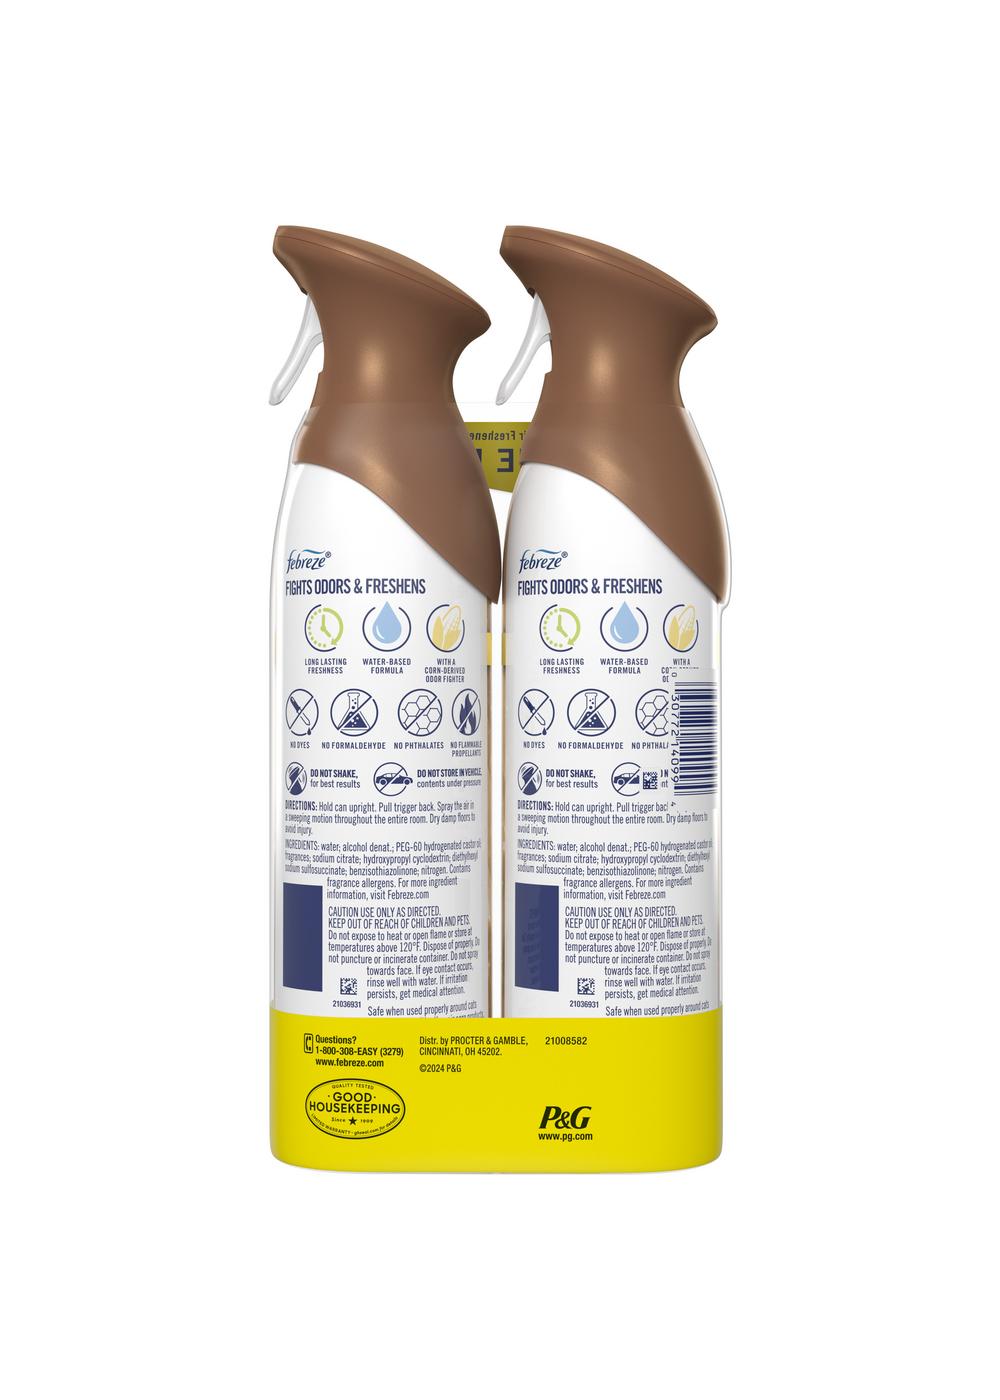 Febreze Air Mist Odor-Fighting Aerosol Air Freshener - Sea Salt Carmel & Maple; image 2 of 2